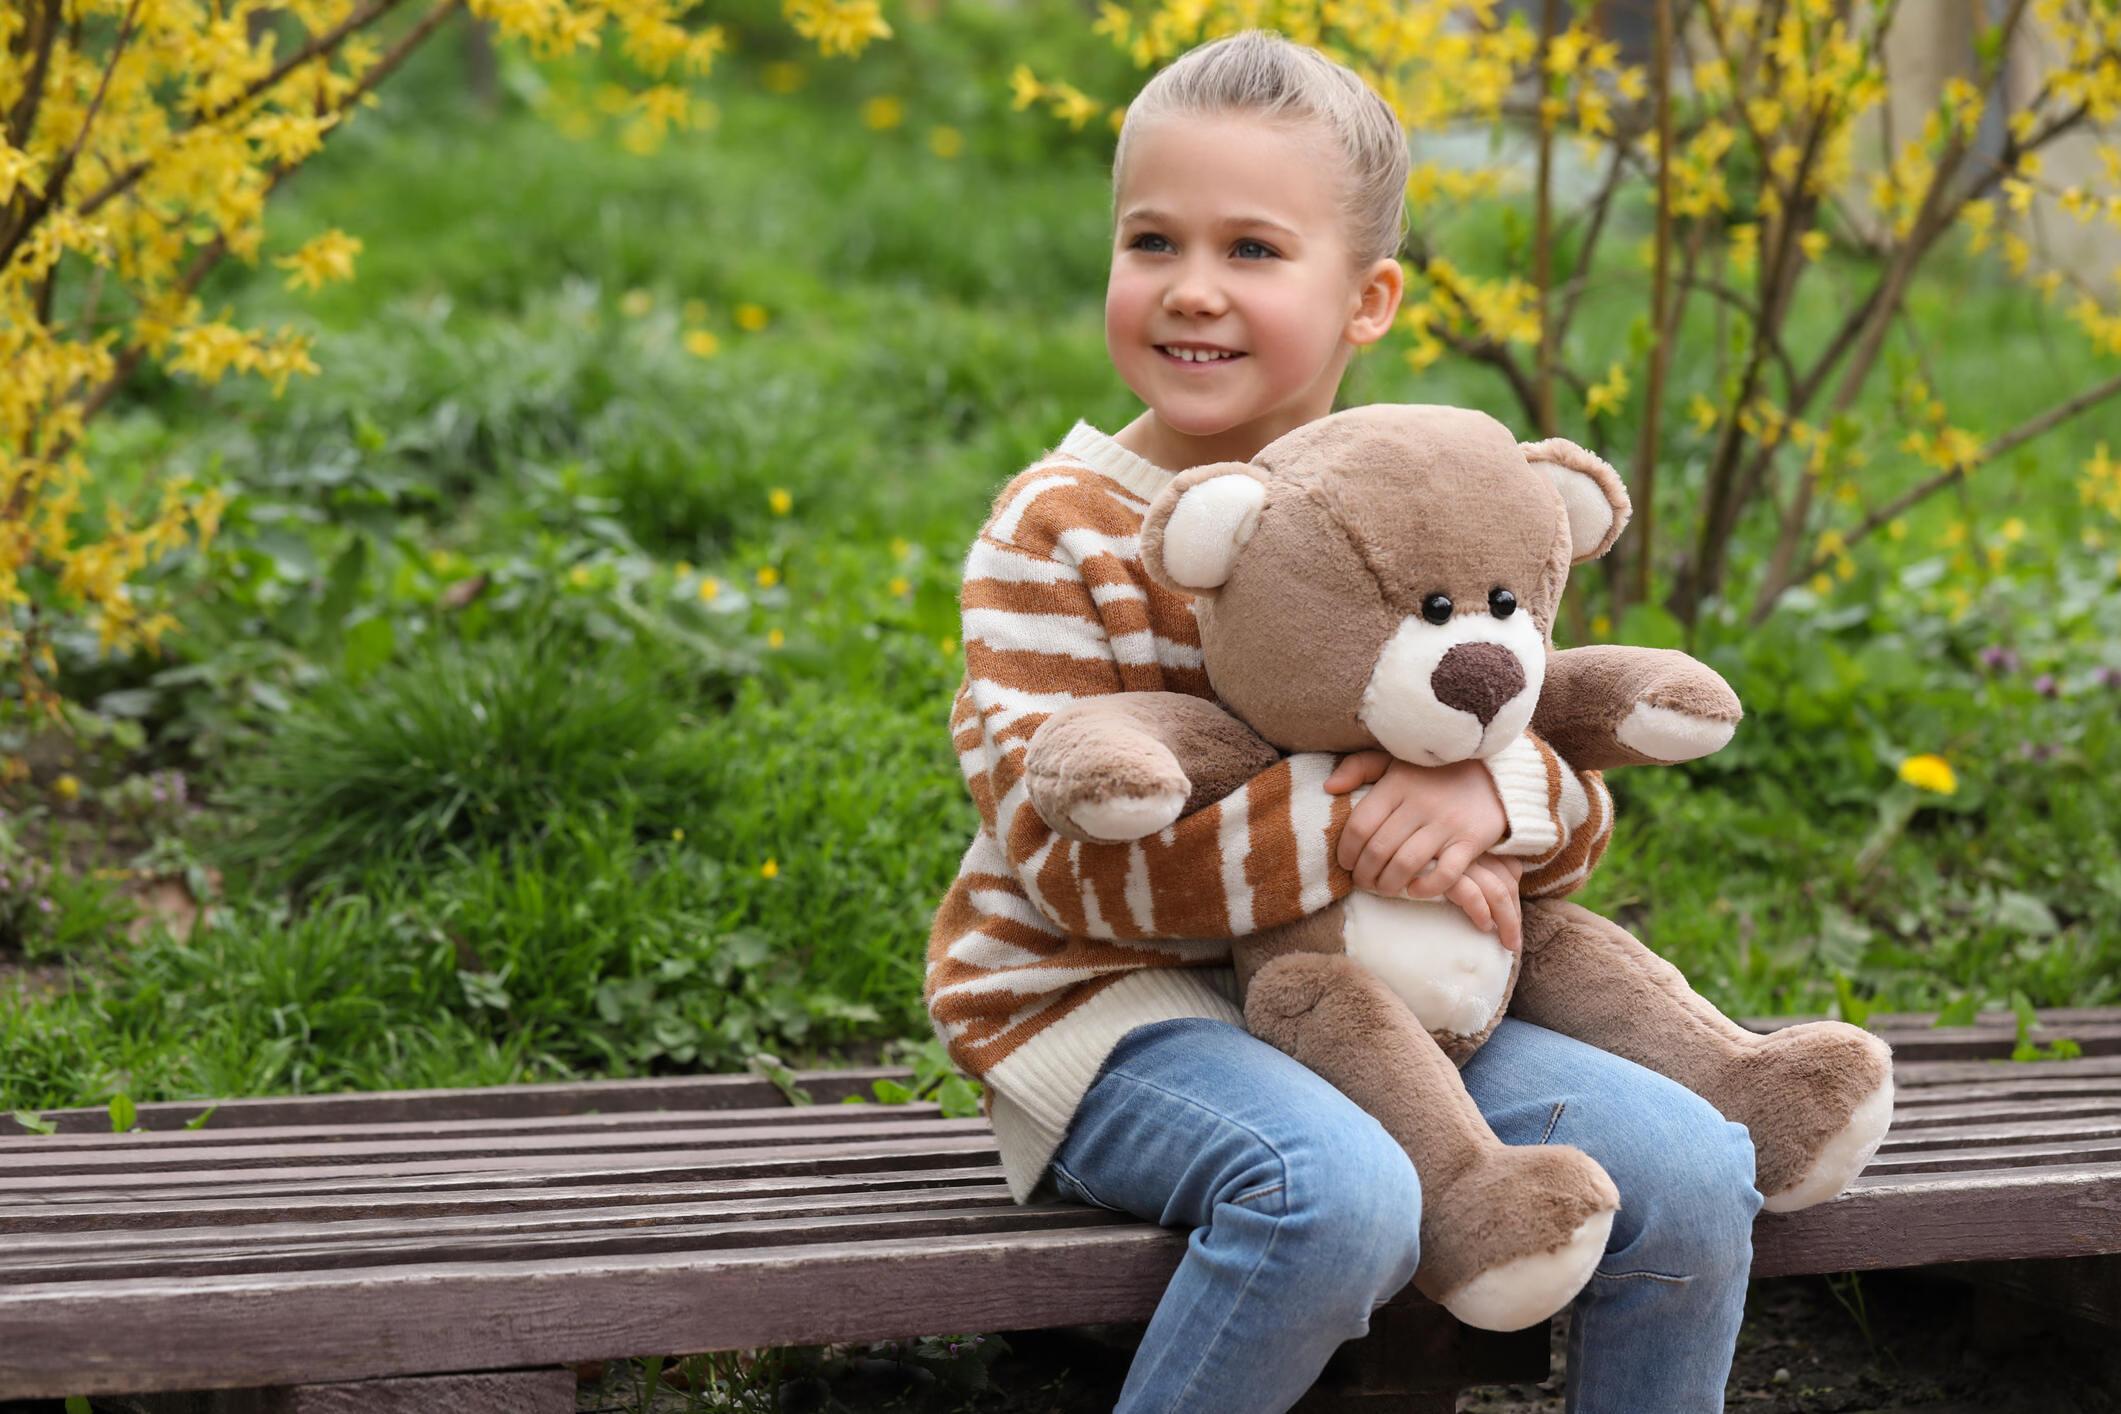 Emotional development of children through choosing stuffed animals